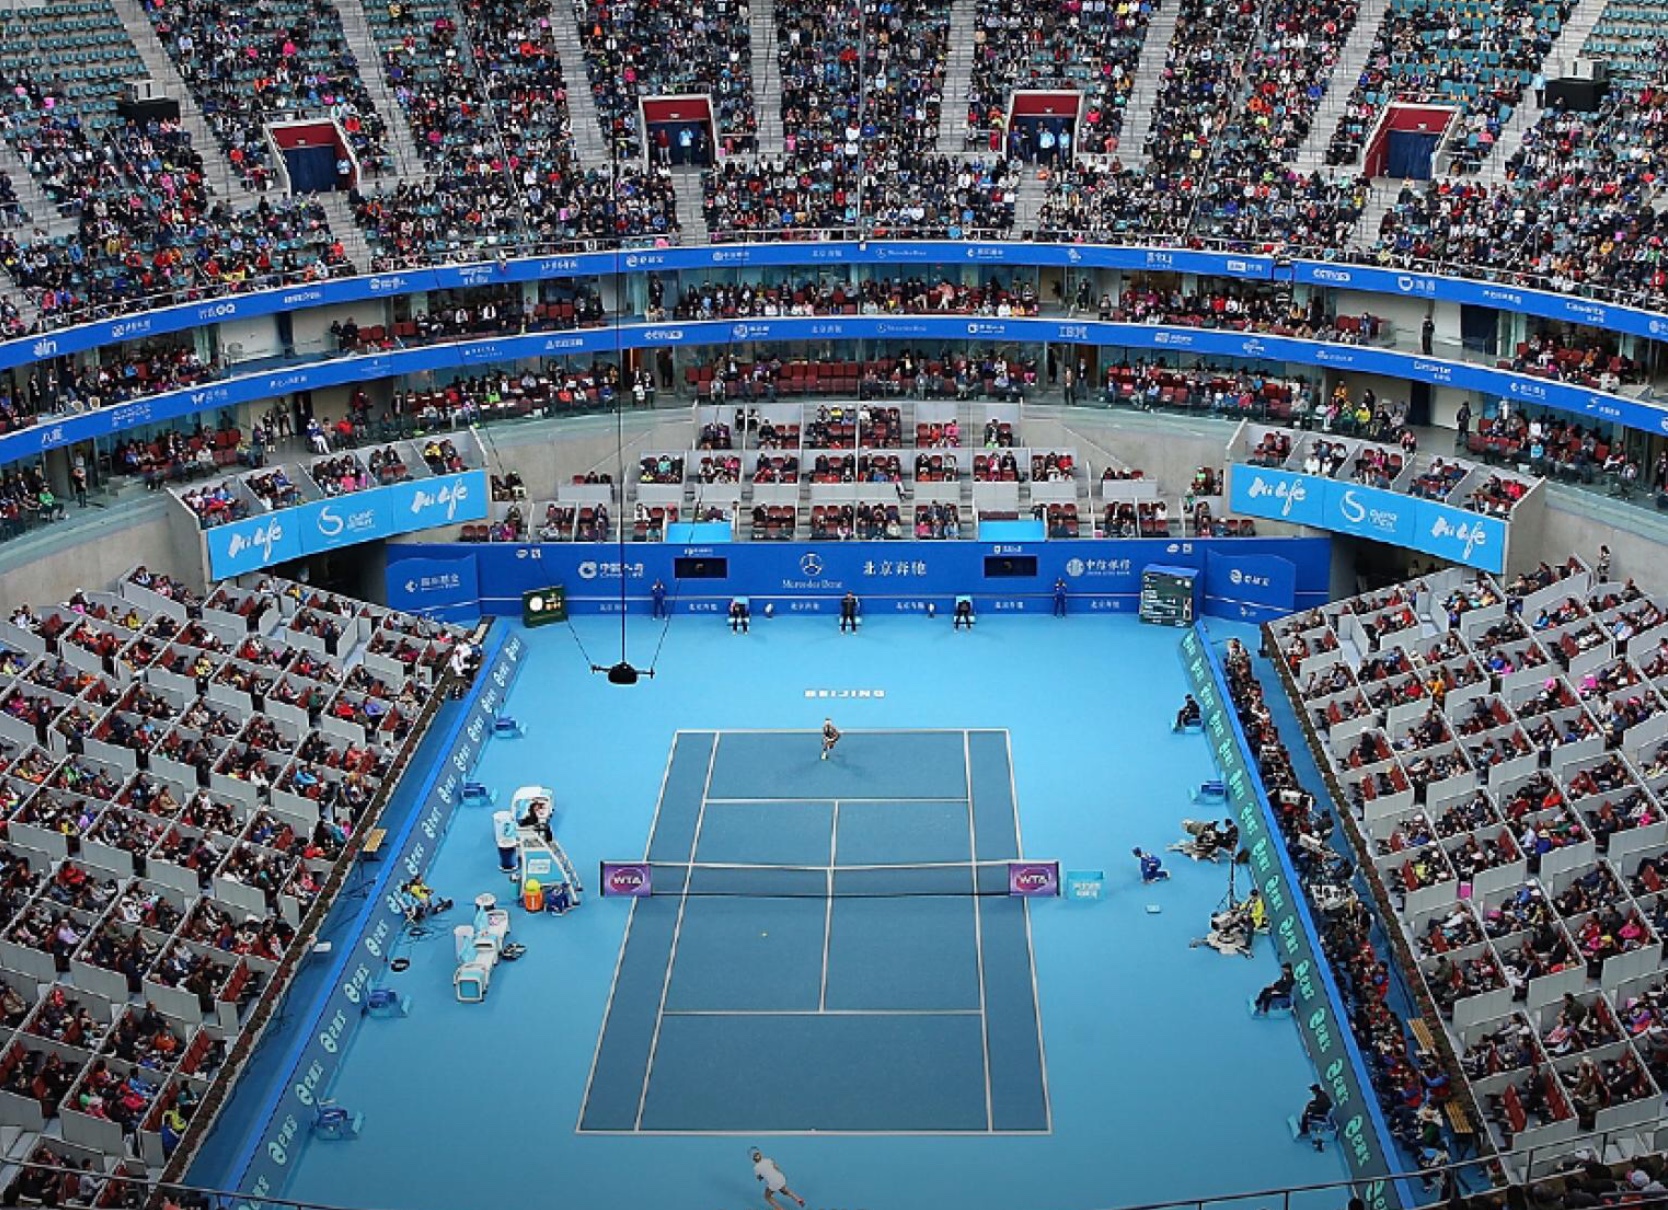 China Open, Beijing, China WTA Premier Mandatory Tennis Frontier Forums